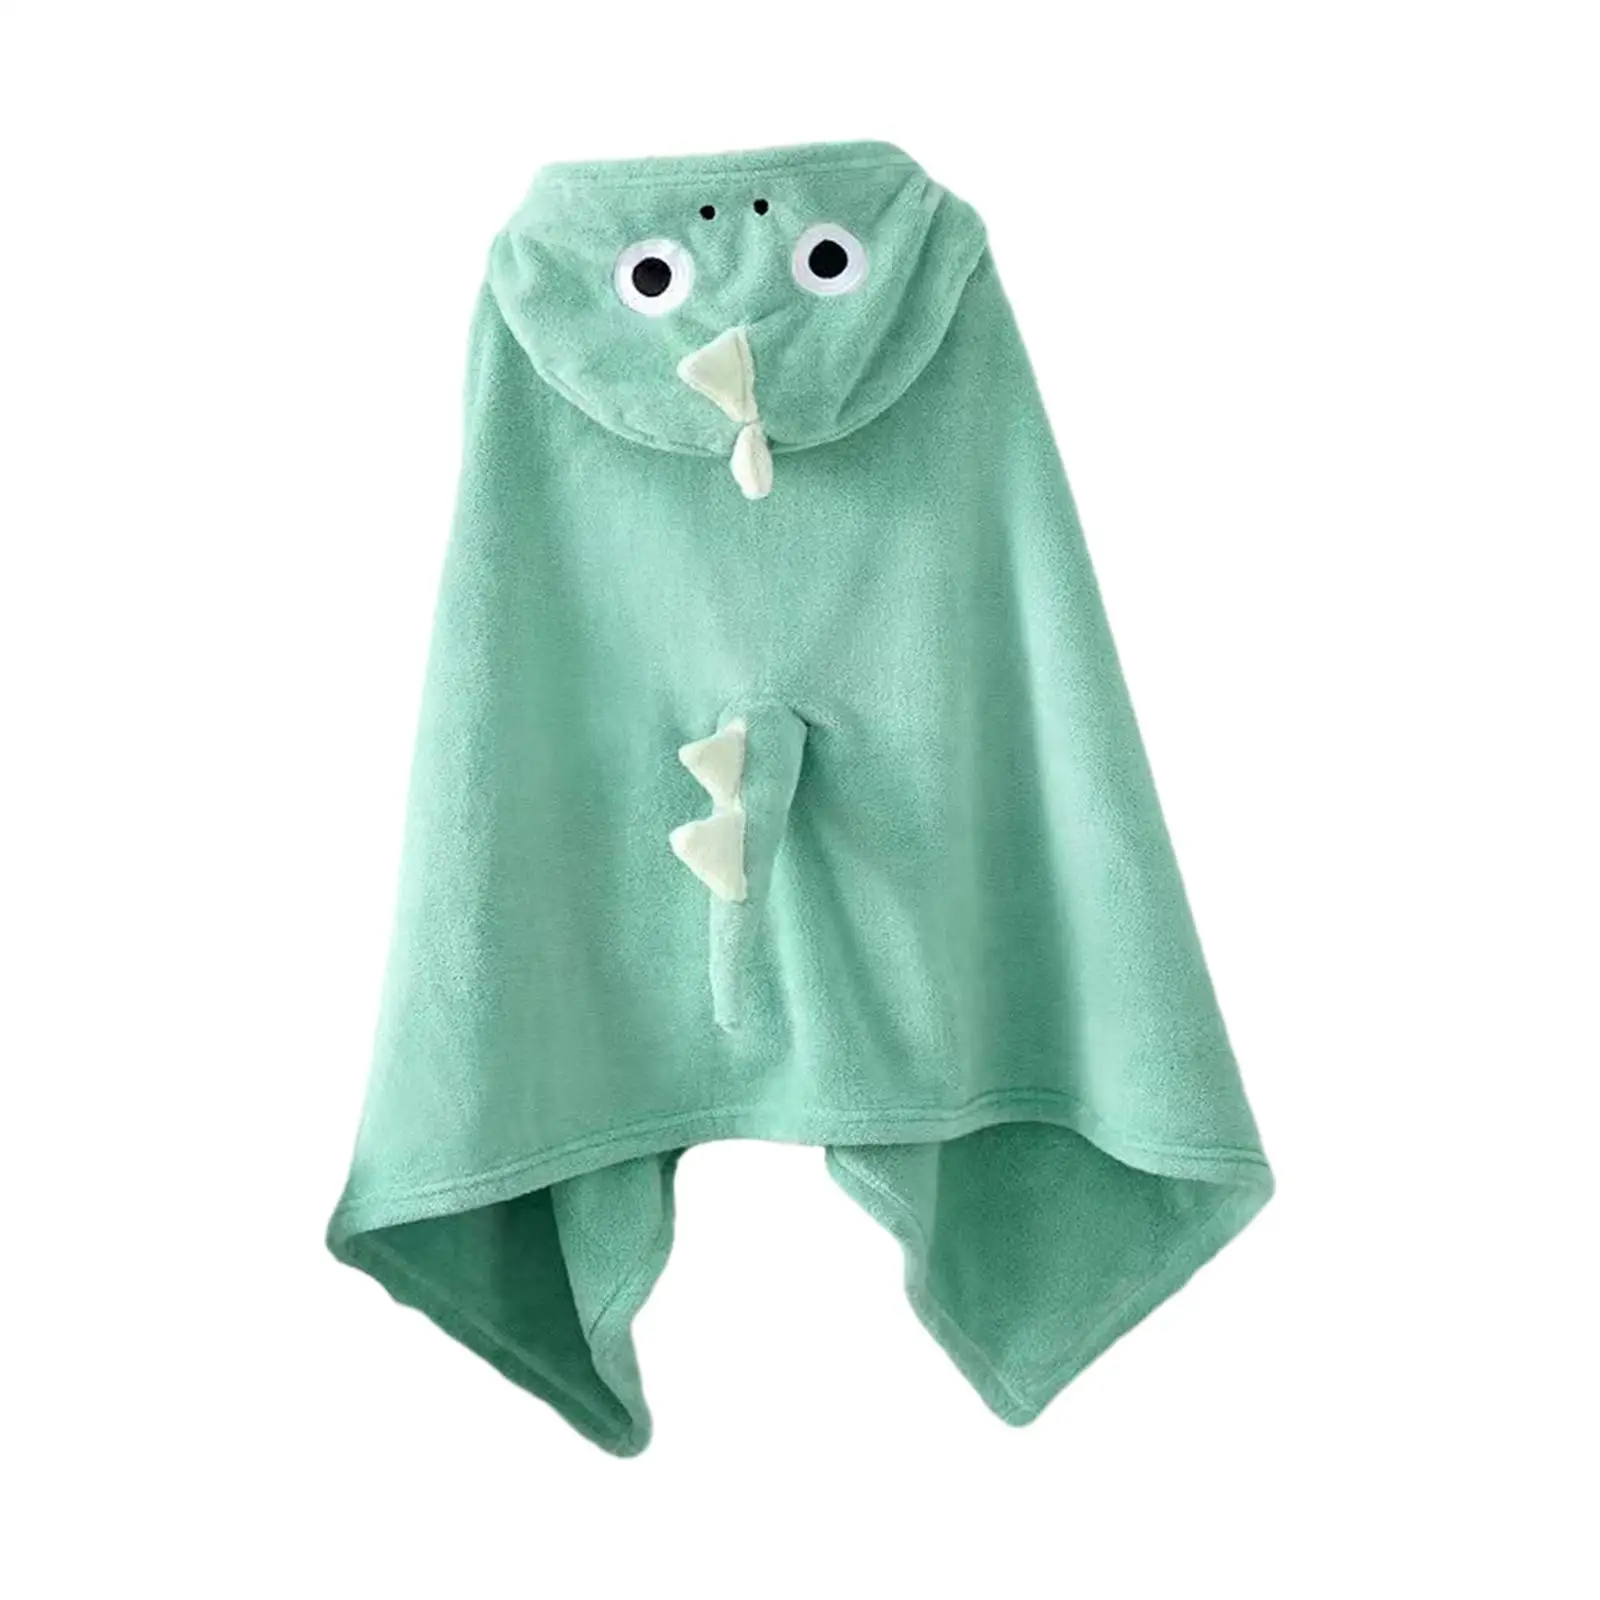 Infant Towel Blanket Accessory Nightwear for Baby Boys Girls Multi Purpose Use Baby Hooded Bathrobe Animal Bathrobe Baby Cloak